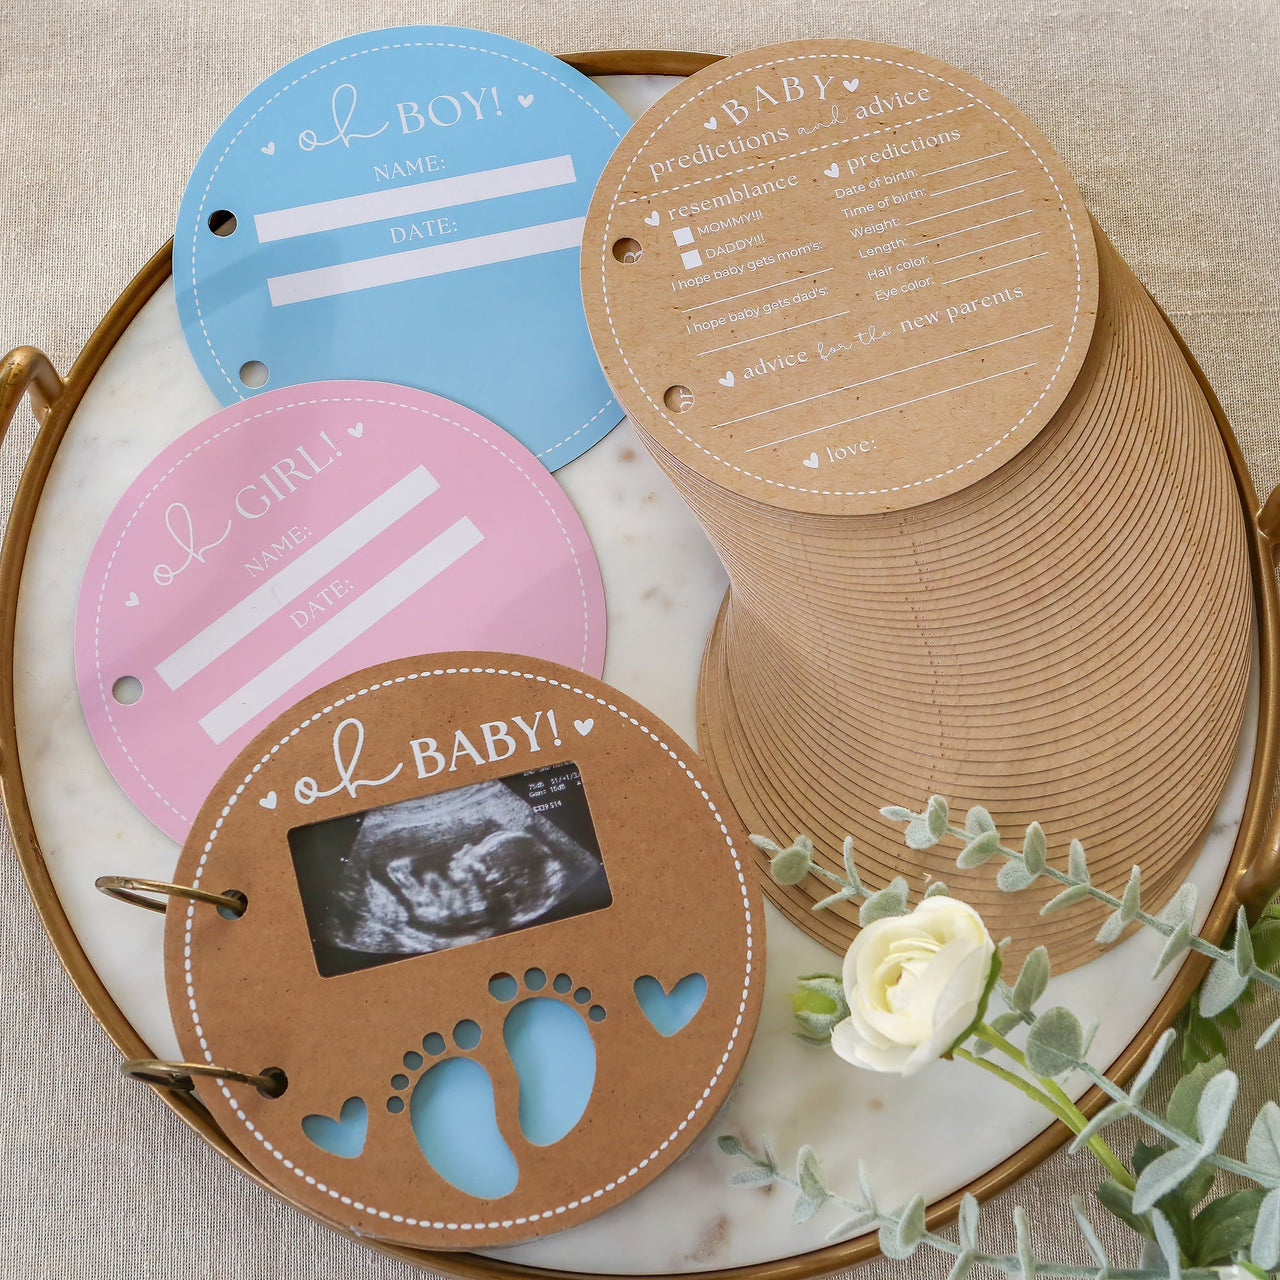 Baby Shower Prediction Advice Card Keepsake Book - Kraft Circle Shape Alternate Image 1 - My Wedding Favors